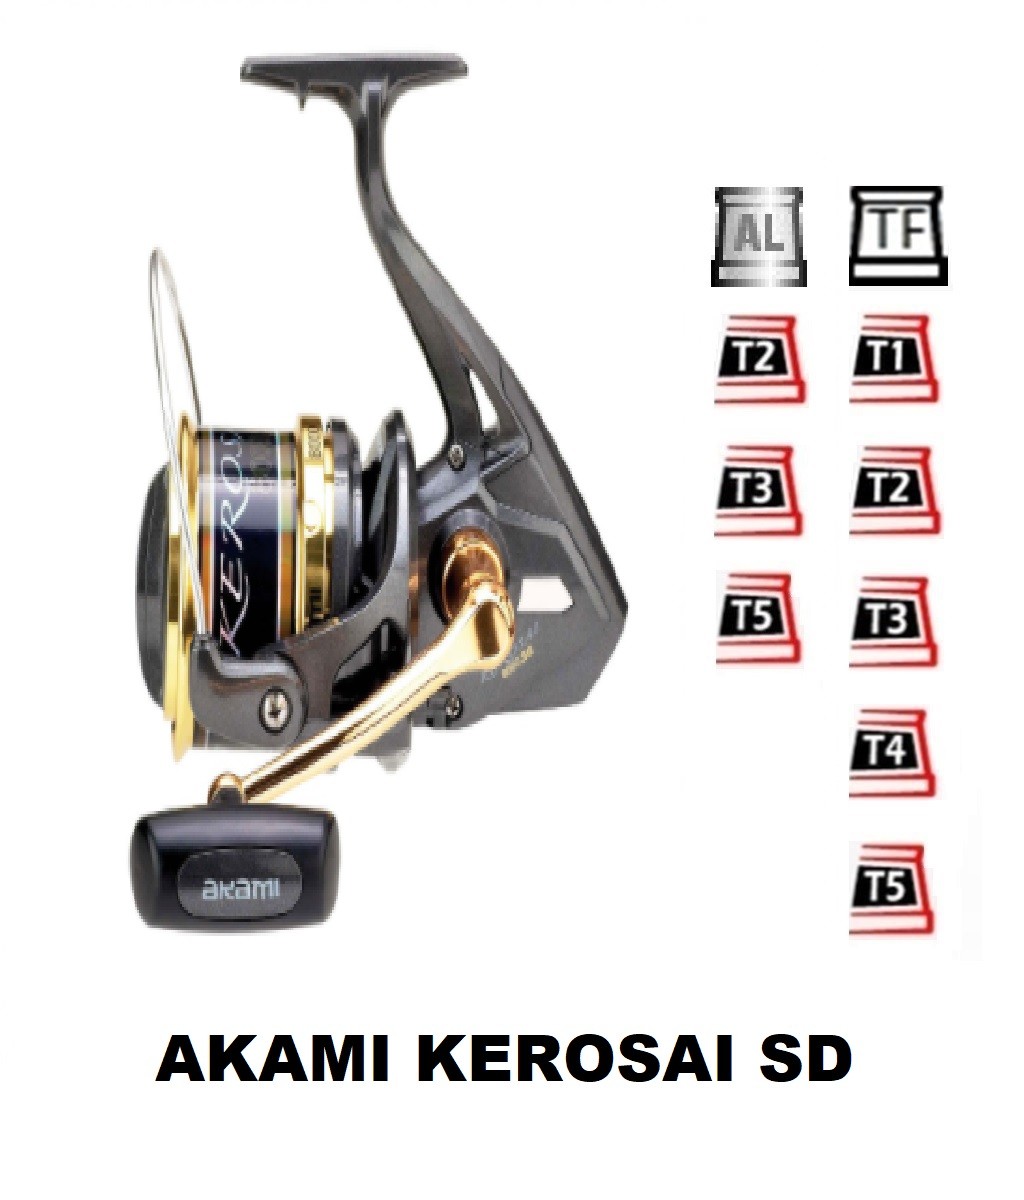 Ersatzpule kompatible mit Akami Kerosai SD